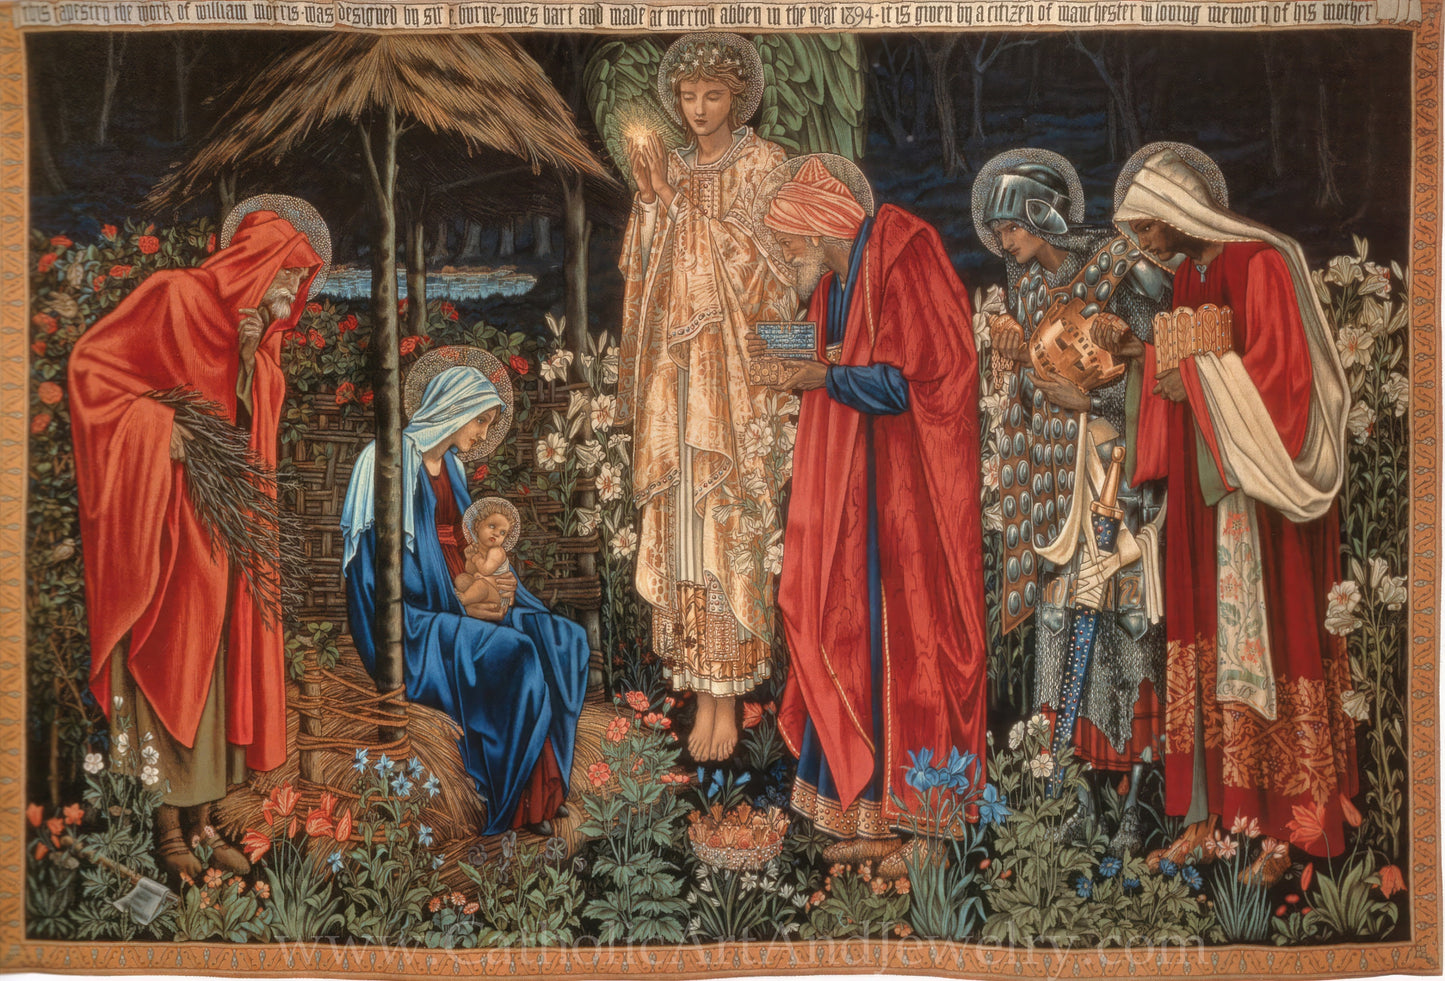 New! Adoration of the Magi – based on a Tapestry by Edward Burne-Jones & William Morris – Catholic Art Print – Christmas – Archival Quality